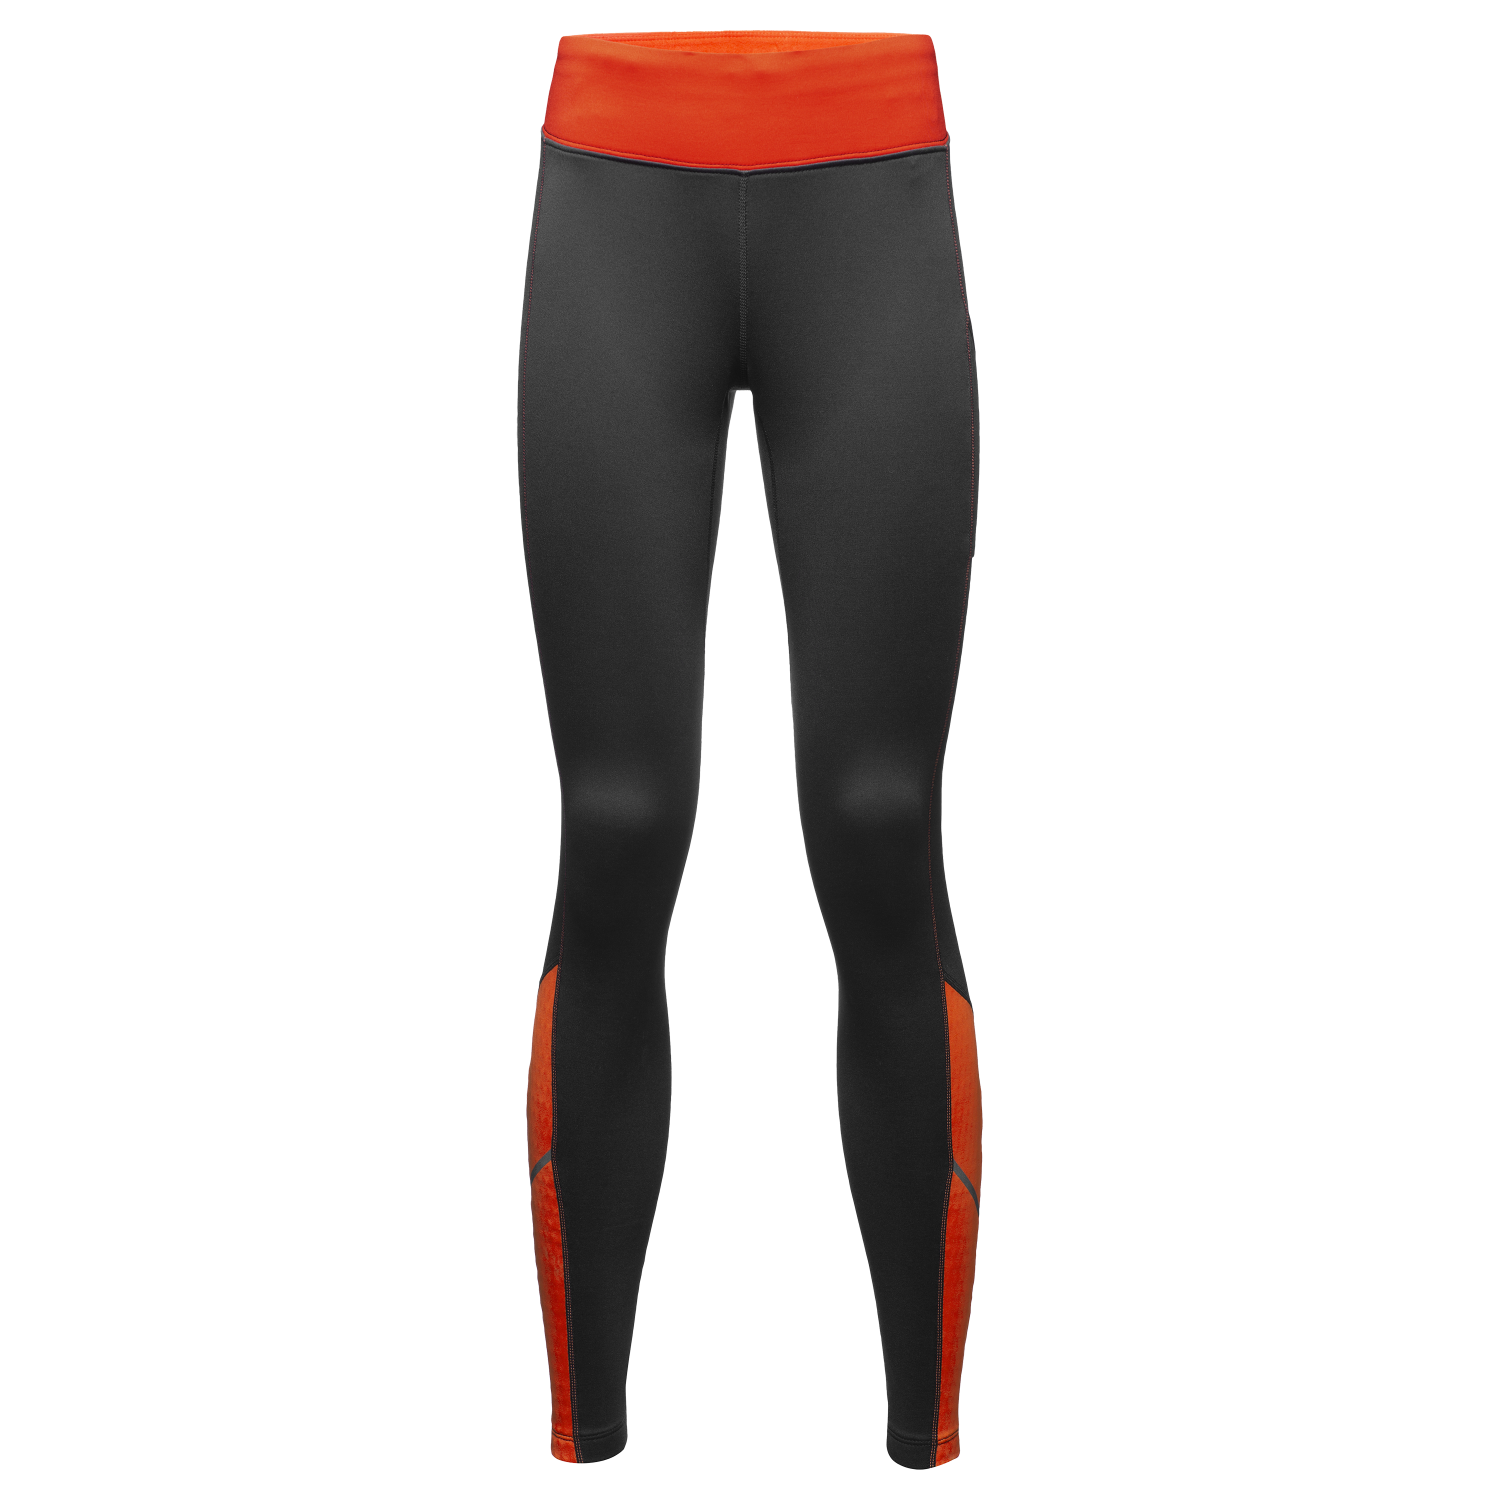 GOREWEAR R3 Women's Thermo Running Tights in Black/Fireball | Medium (8-10) | Slim fit